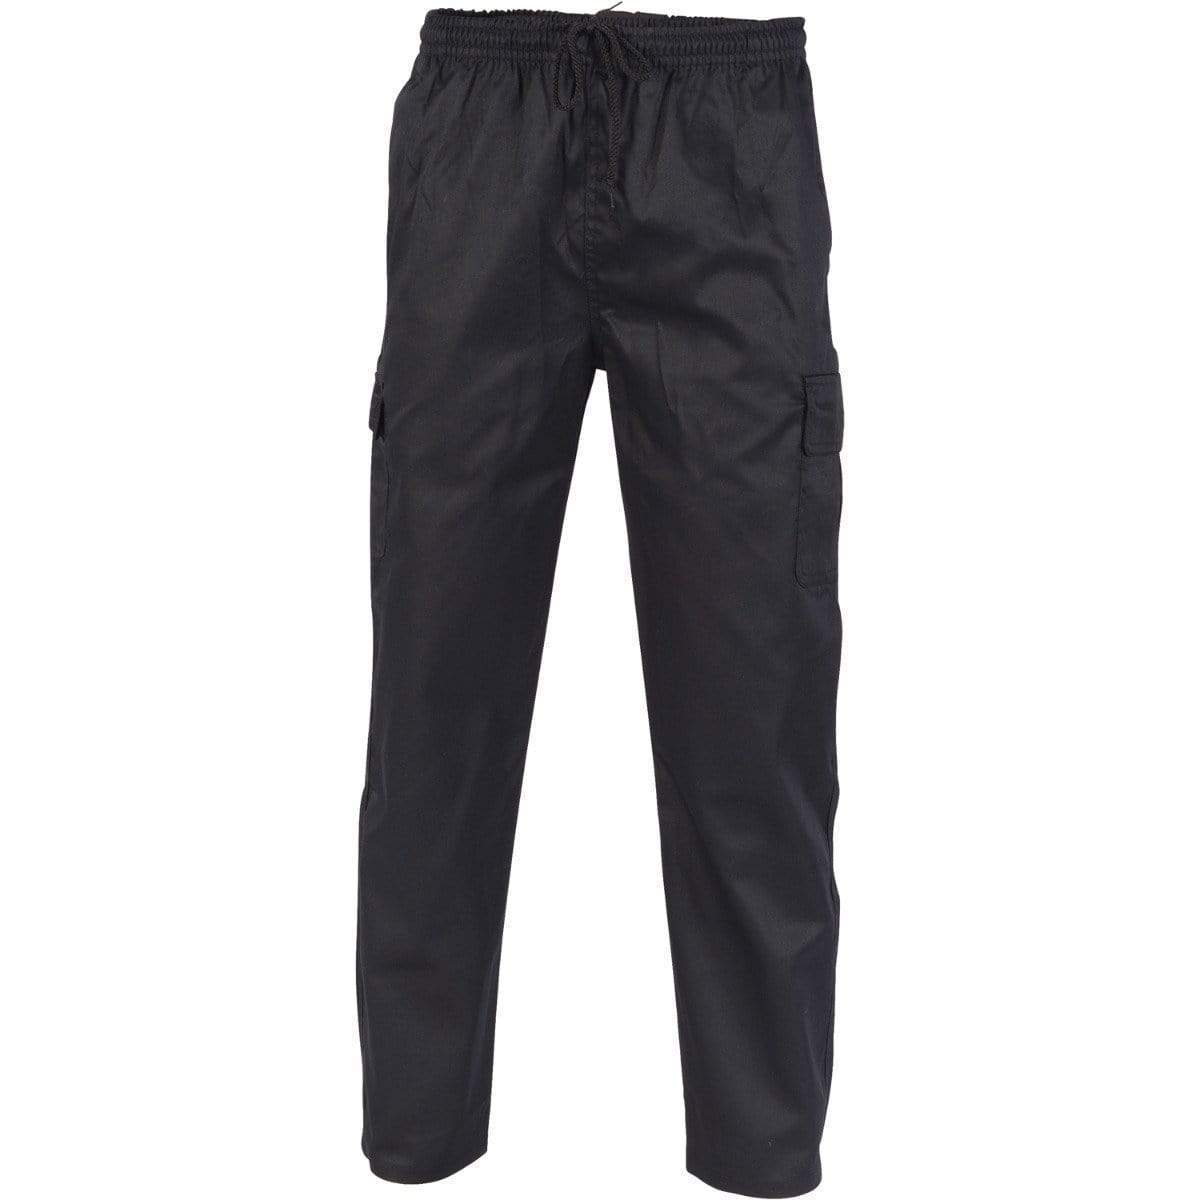 Dnc Workwear Drawstring Poly Cotton Cargo Pants - 1506 Work Wear DNC Workwear Black XS 